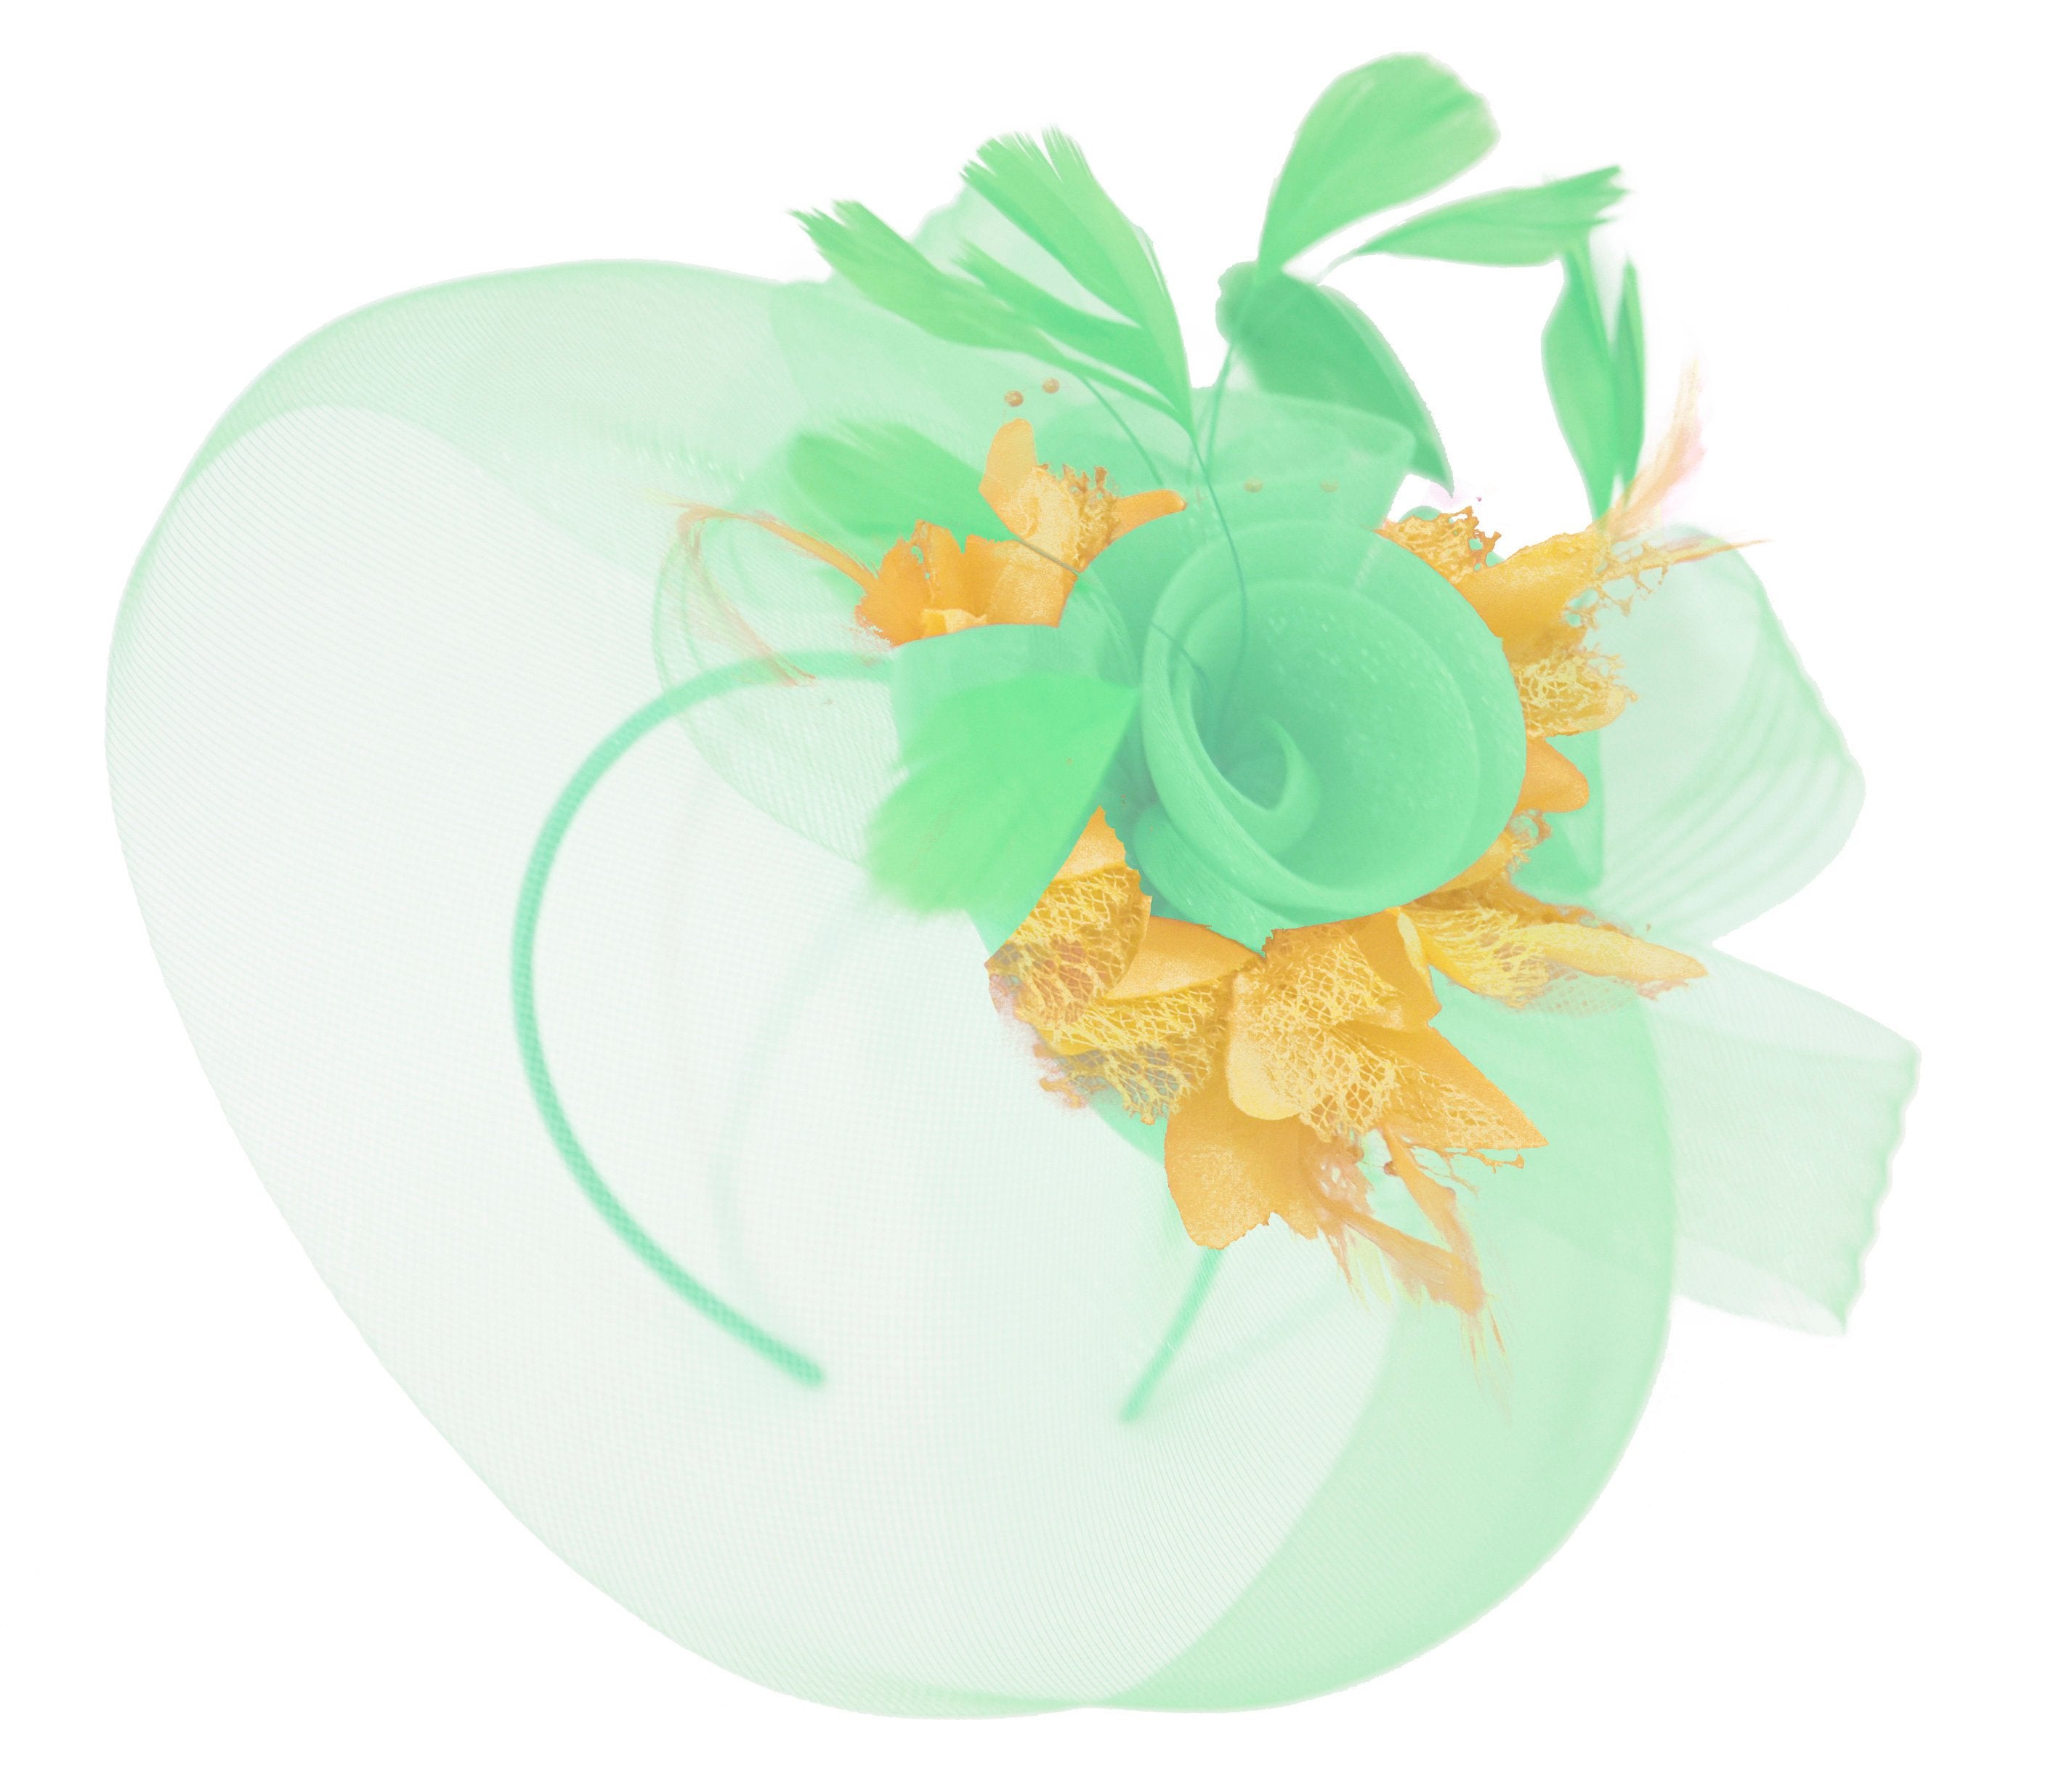 Caprilite Big Mint Green and Gold Fascinator Hat Veil Net Ascot Derby Races Wedding Headband Feather